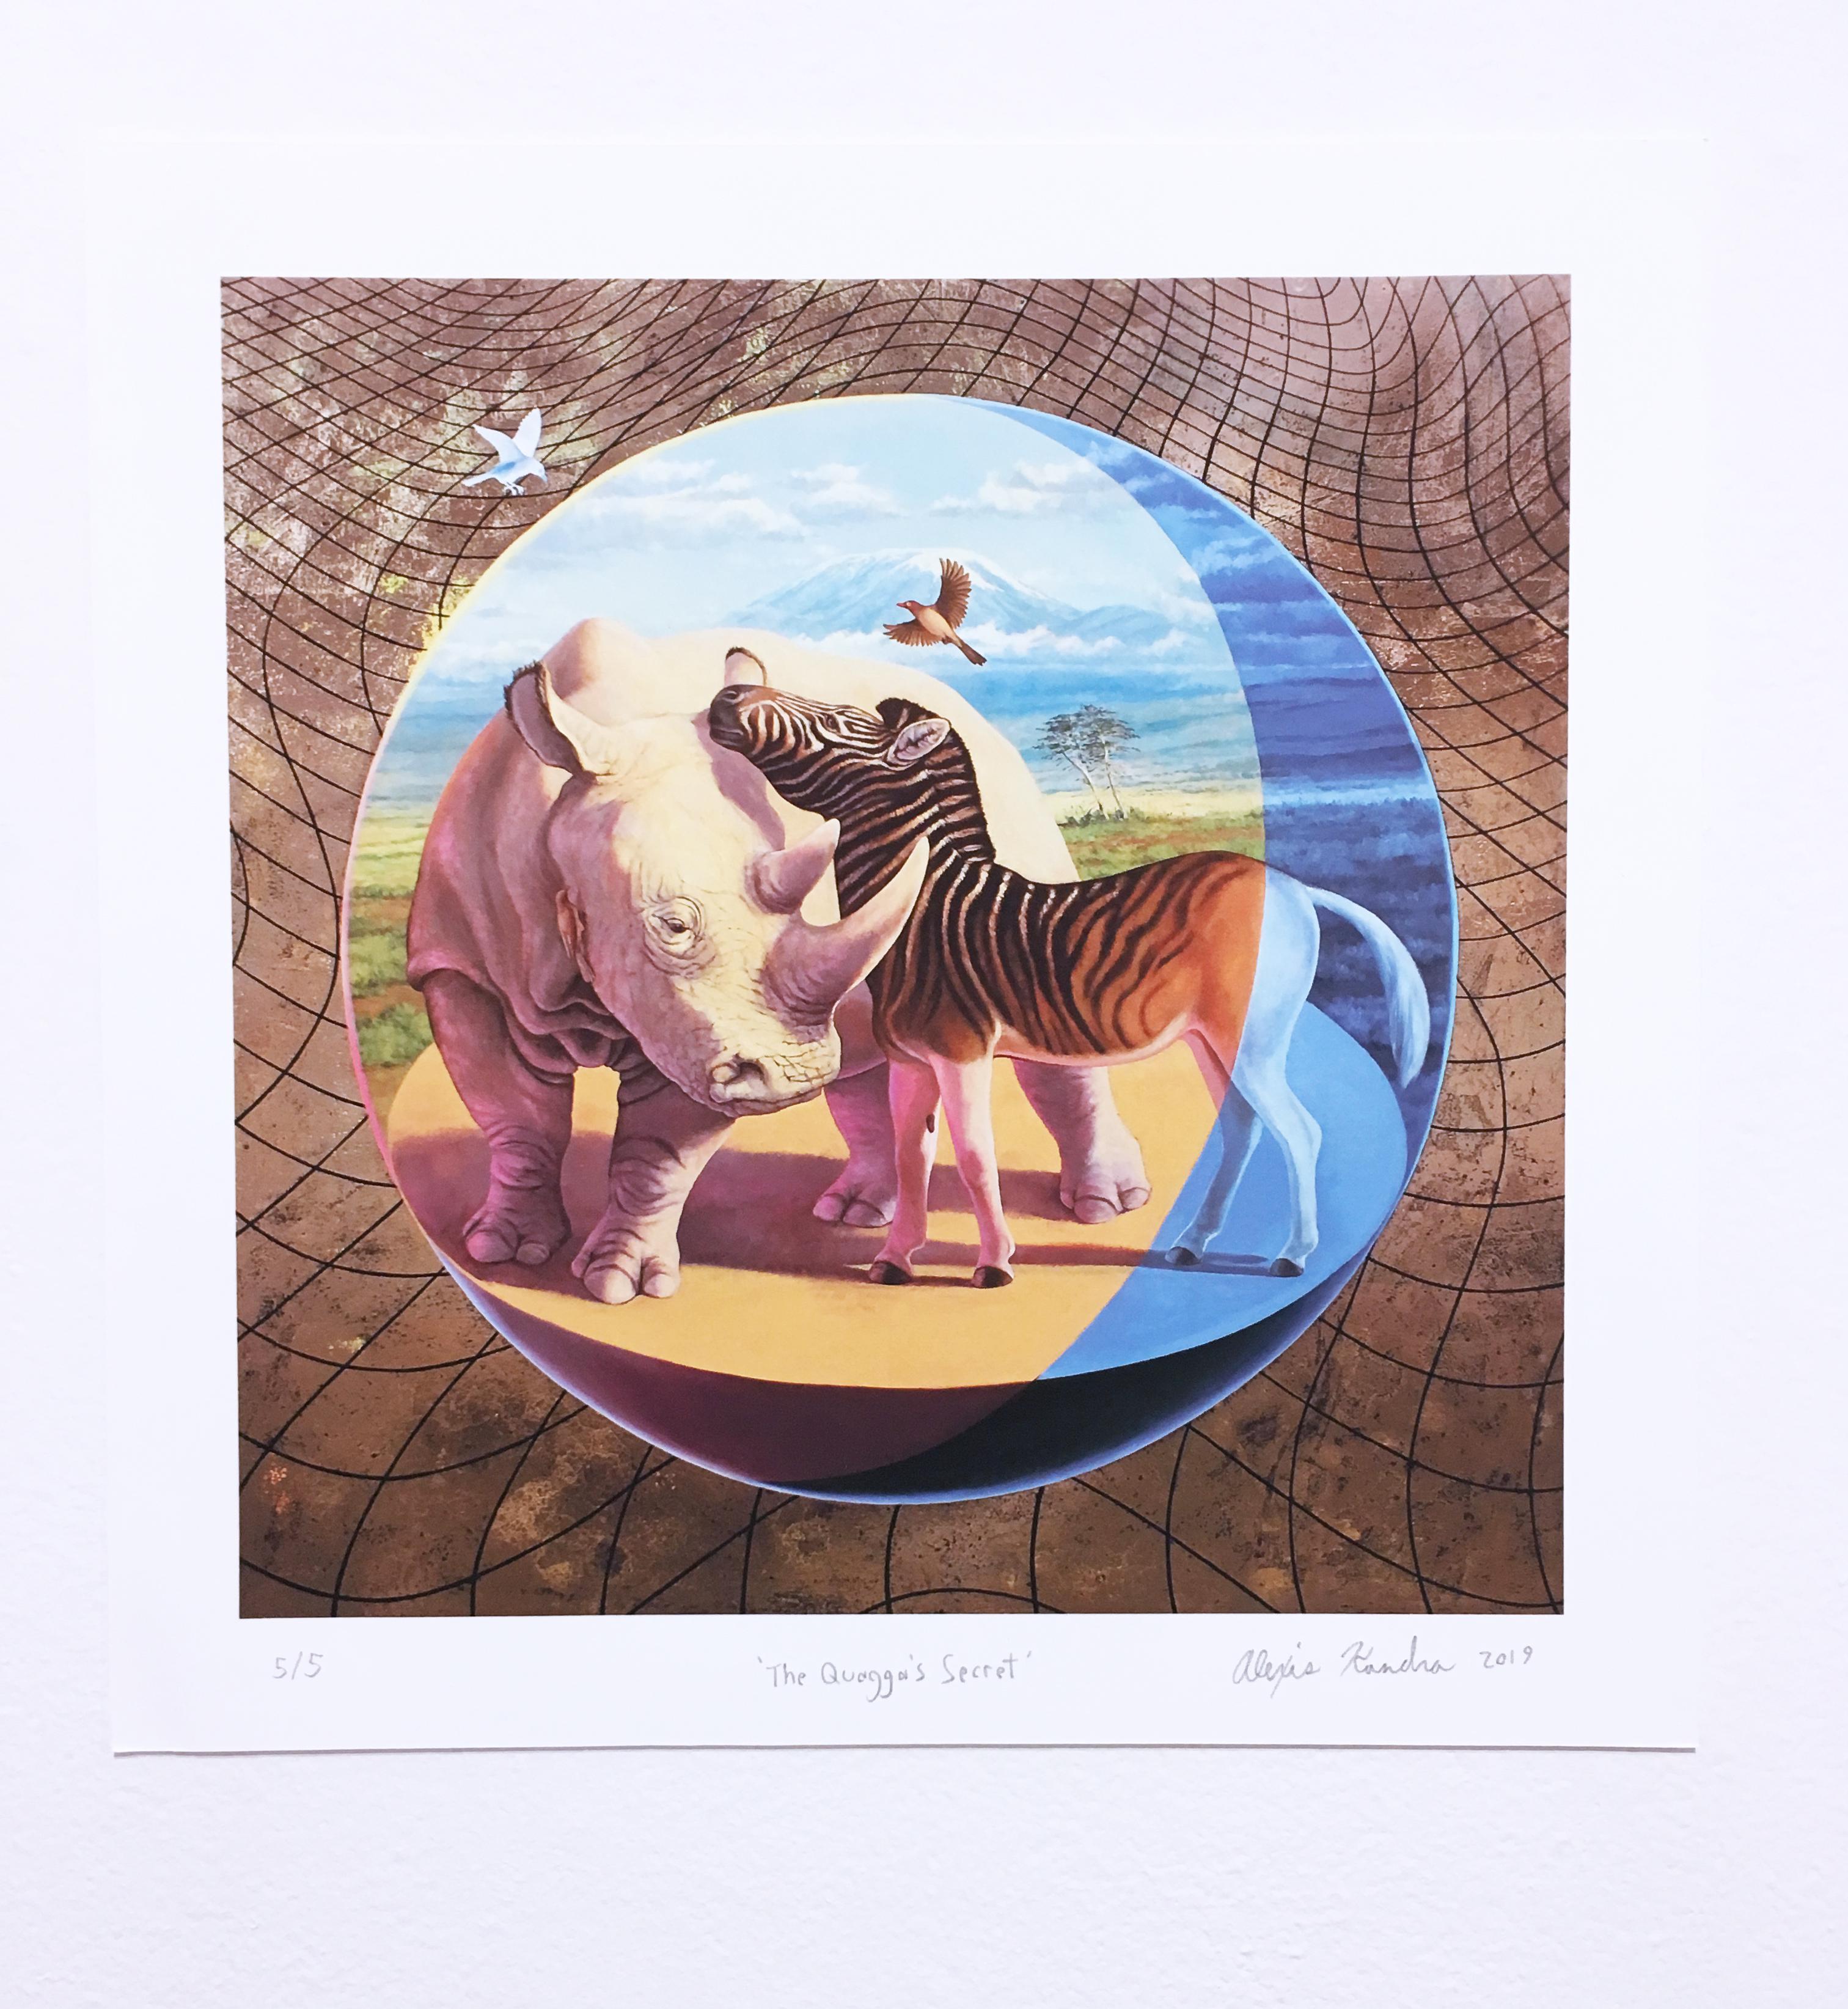 Quagga's Secret, landscape, skyscape, zebra, rhinoceros, wildlife, gold metallic - Print by Alexis Kandra